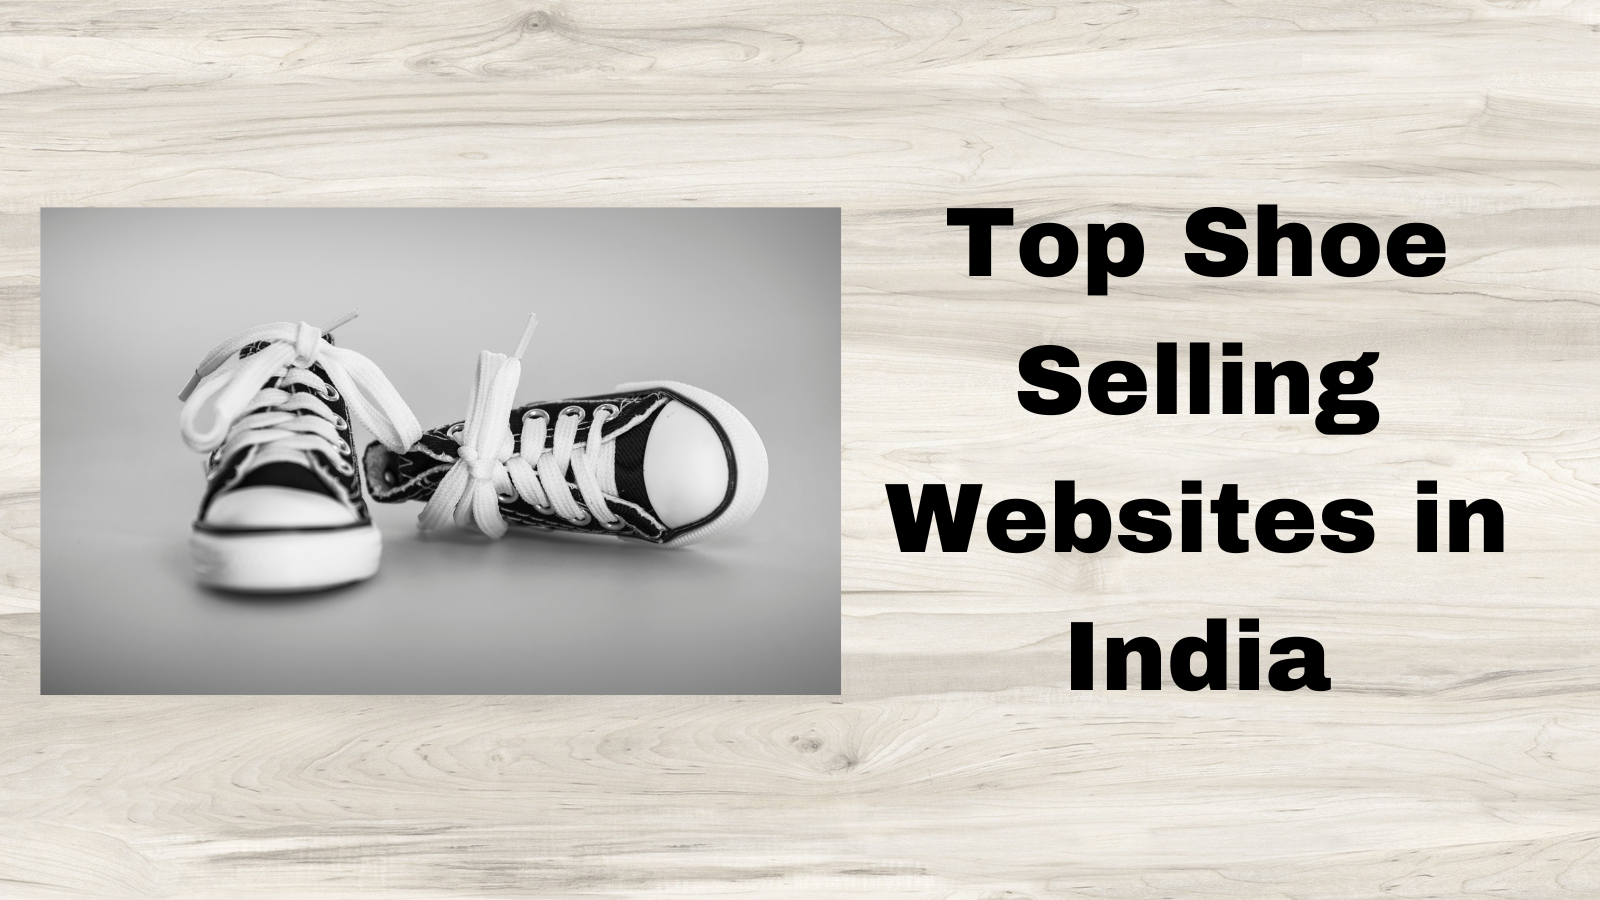 Top Shoe Selling Websites in India